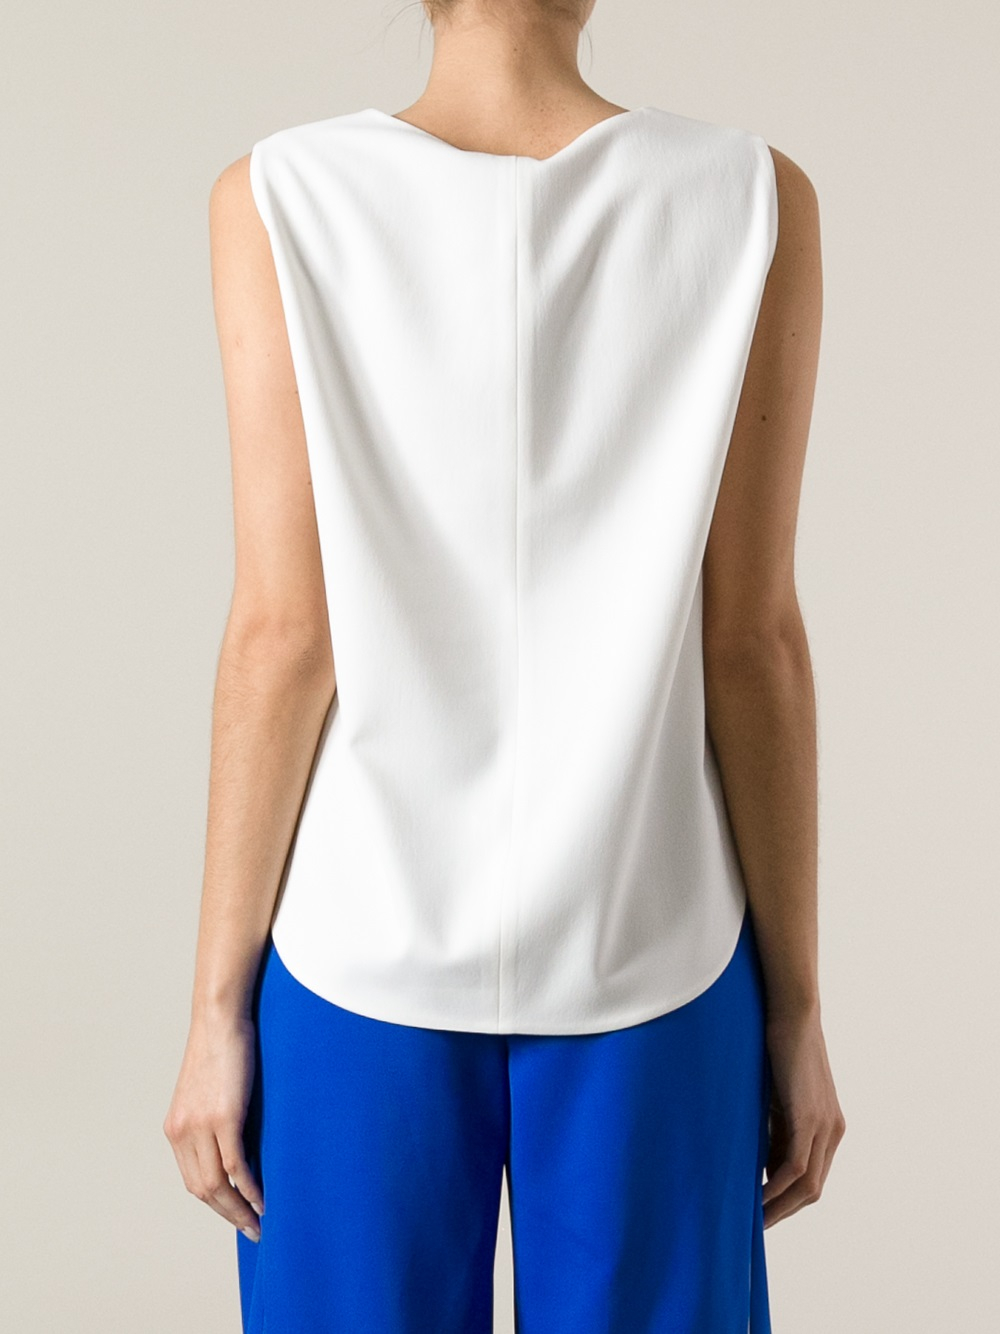 Lyst - Calvin Klein Sleeveless Blouse in White